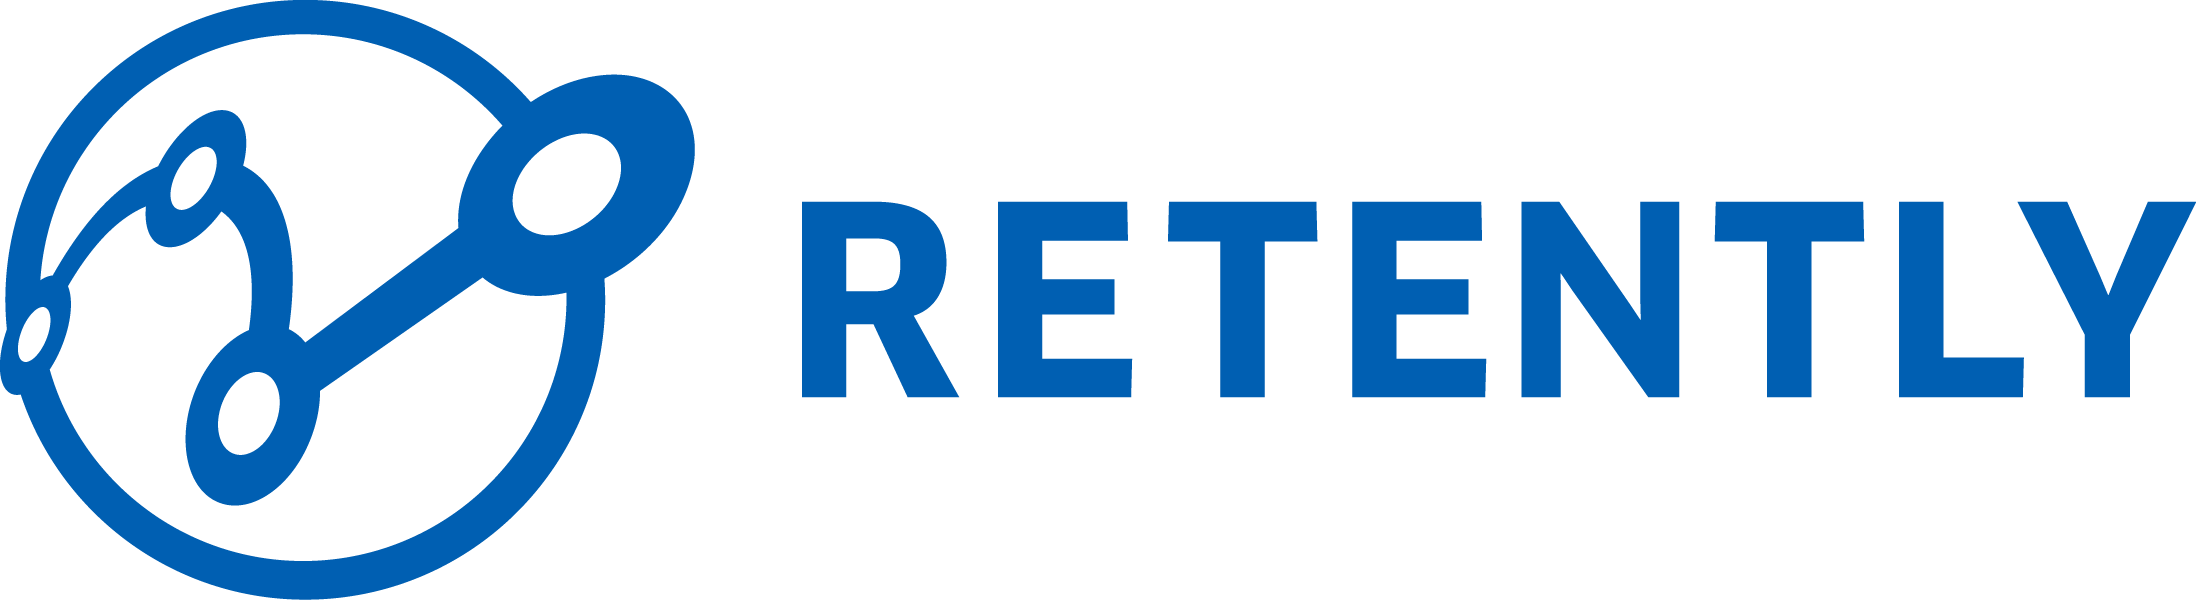 Retently logo